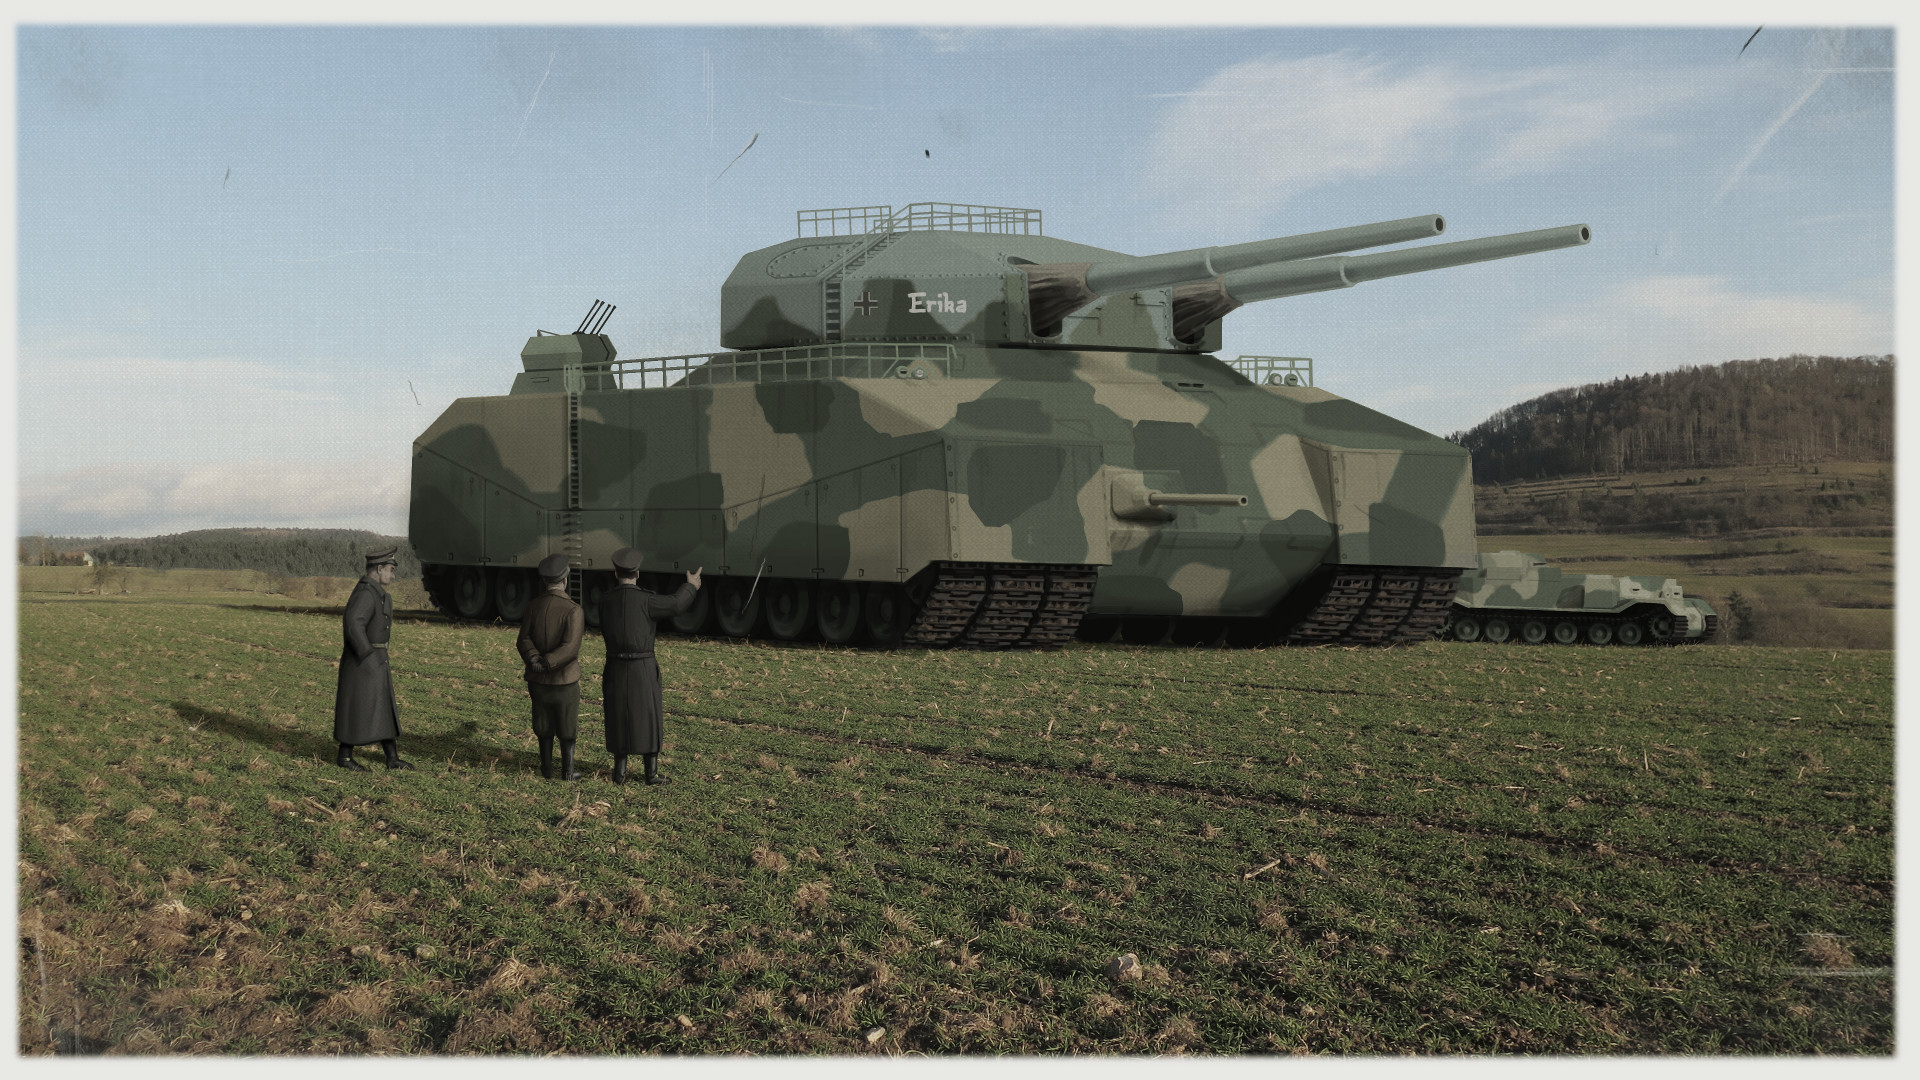 Tank 1000. P1000 танк. Танк p1000 Ratte. Land Cruiser p1000 Ratte. Танк Landkreuzer p1500 Ratte.